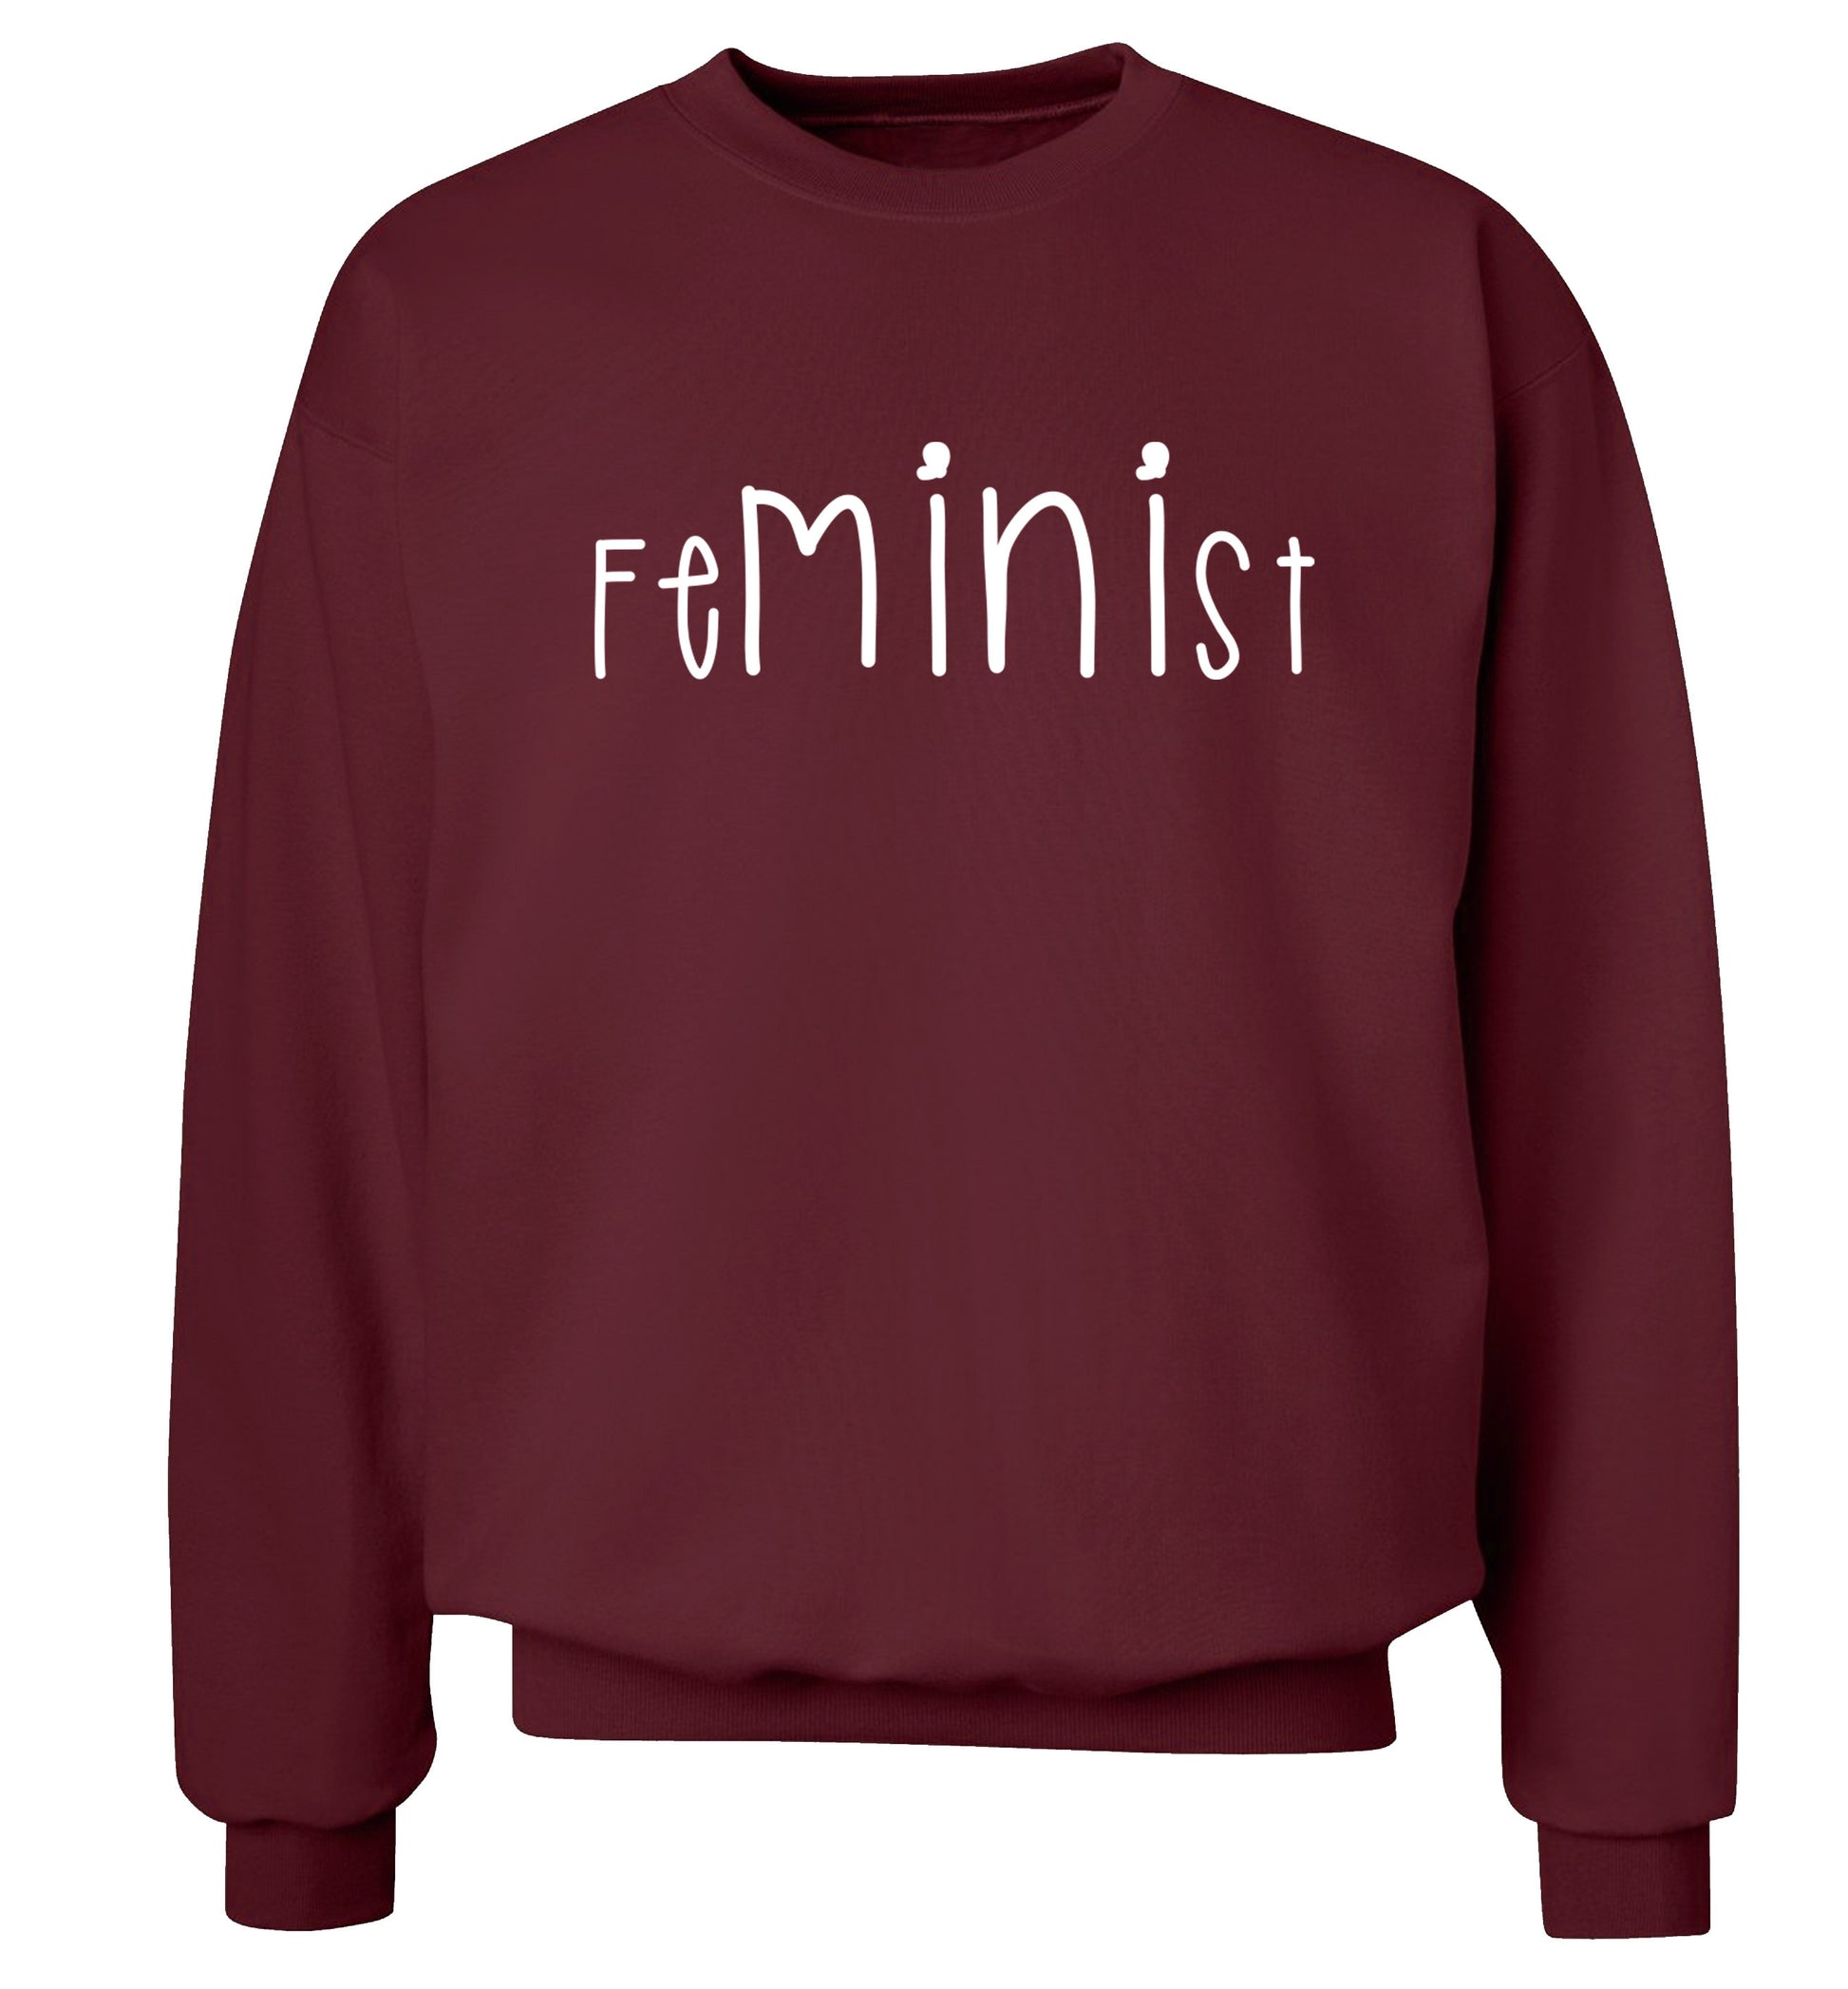 FeMINIst Adult's unisex maroon Sweater 2XL